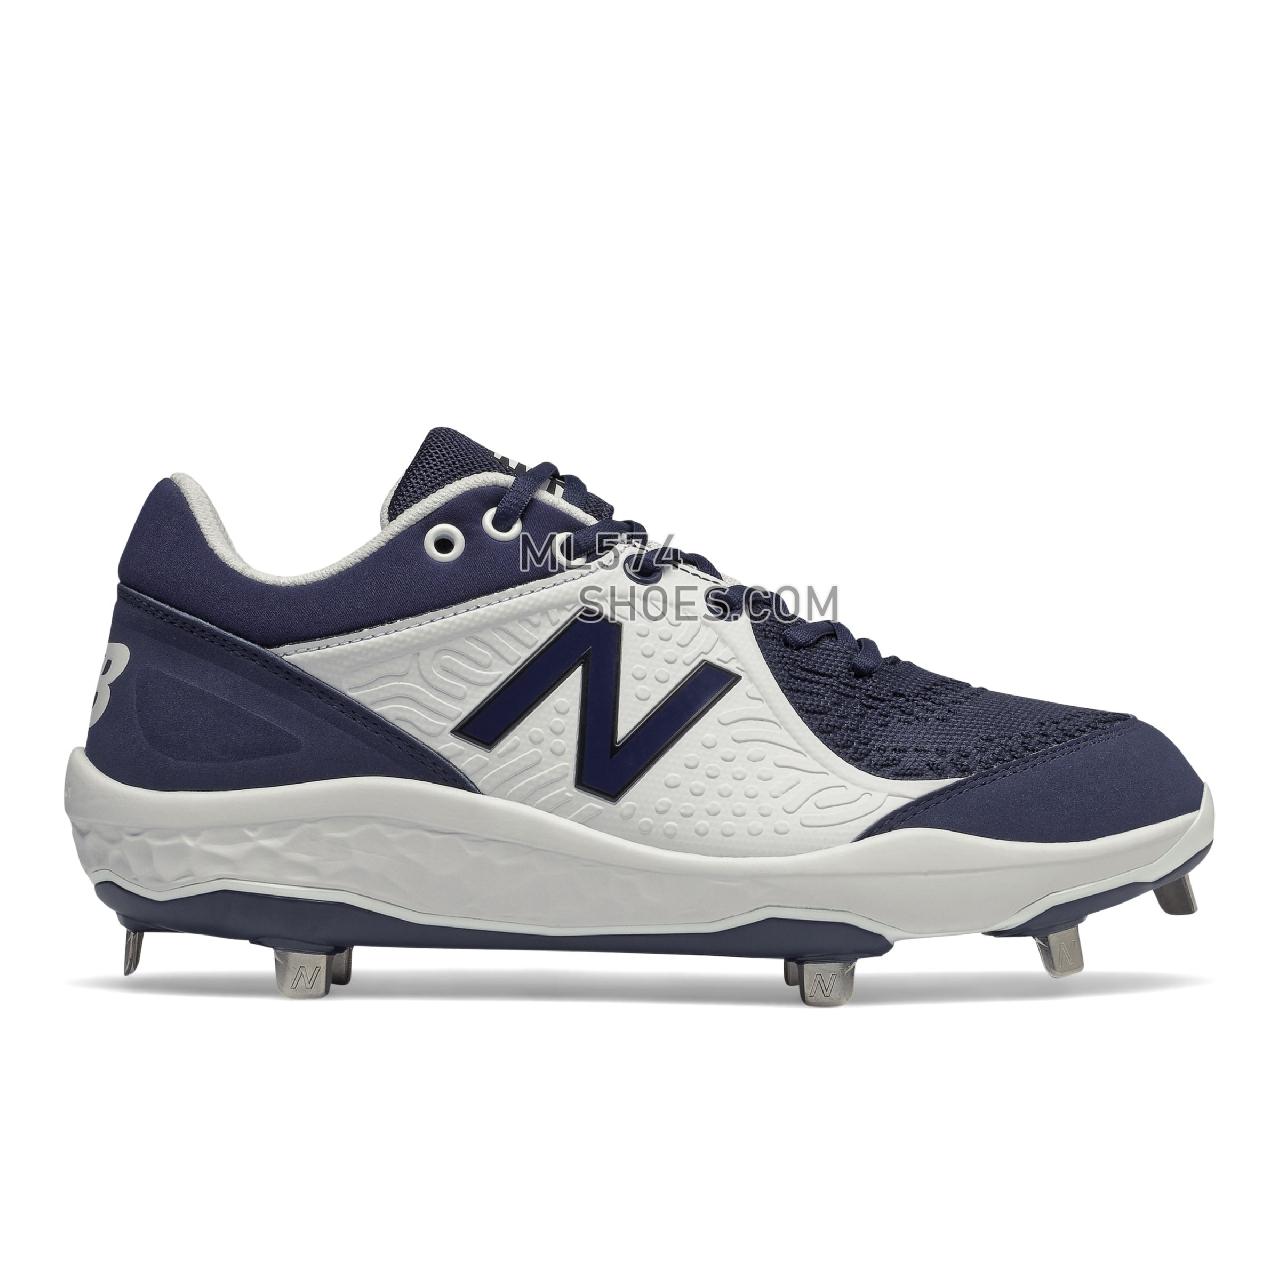 New Balance Fresh Foam 3000 v5 Metal - Men's Mid-Cut Baseball Cleats - Navy with White - L3000TN5